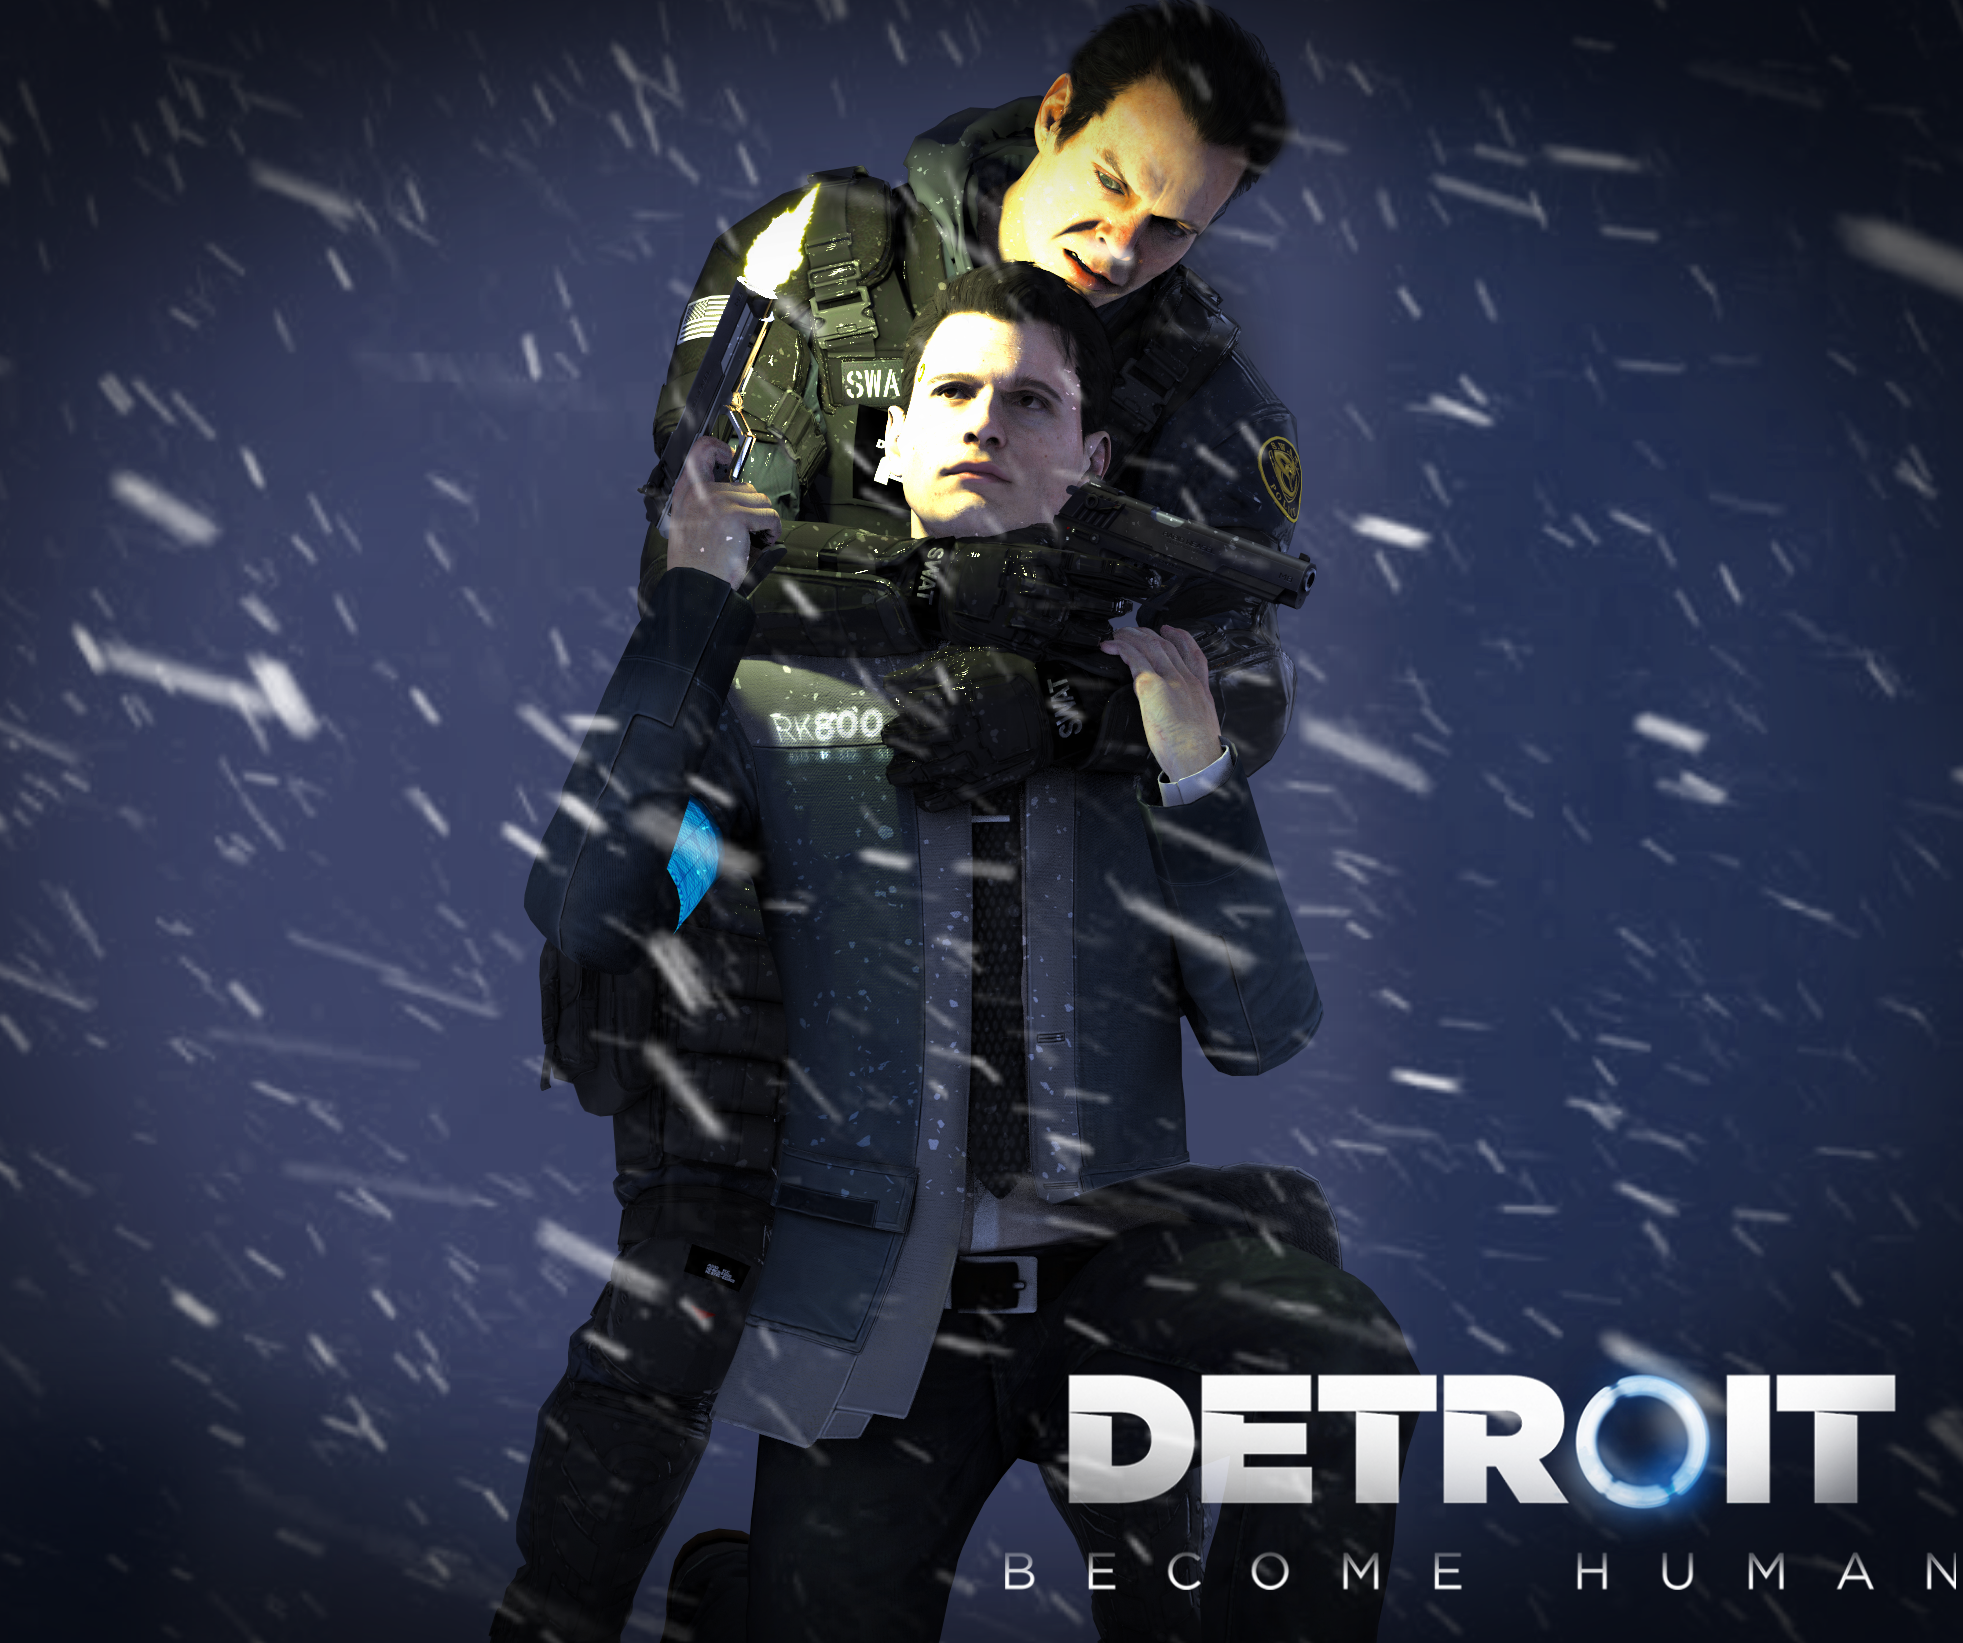 Detroit: Become Human - Markus (Suit) by DaxProduction on DeviantArt